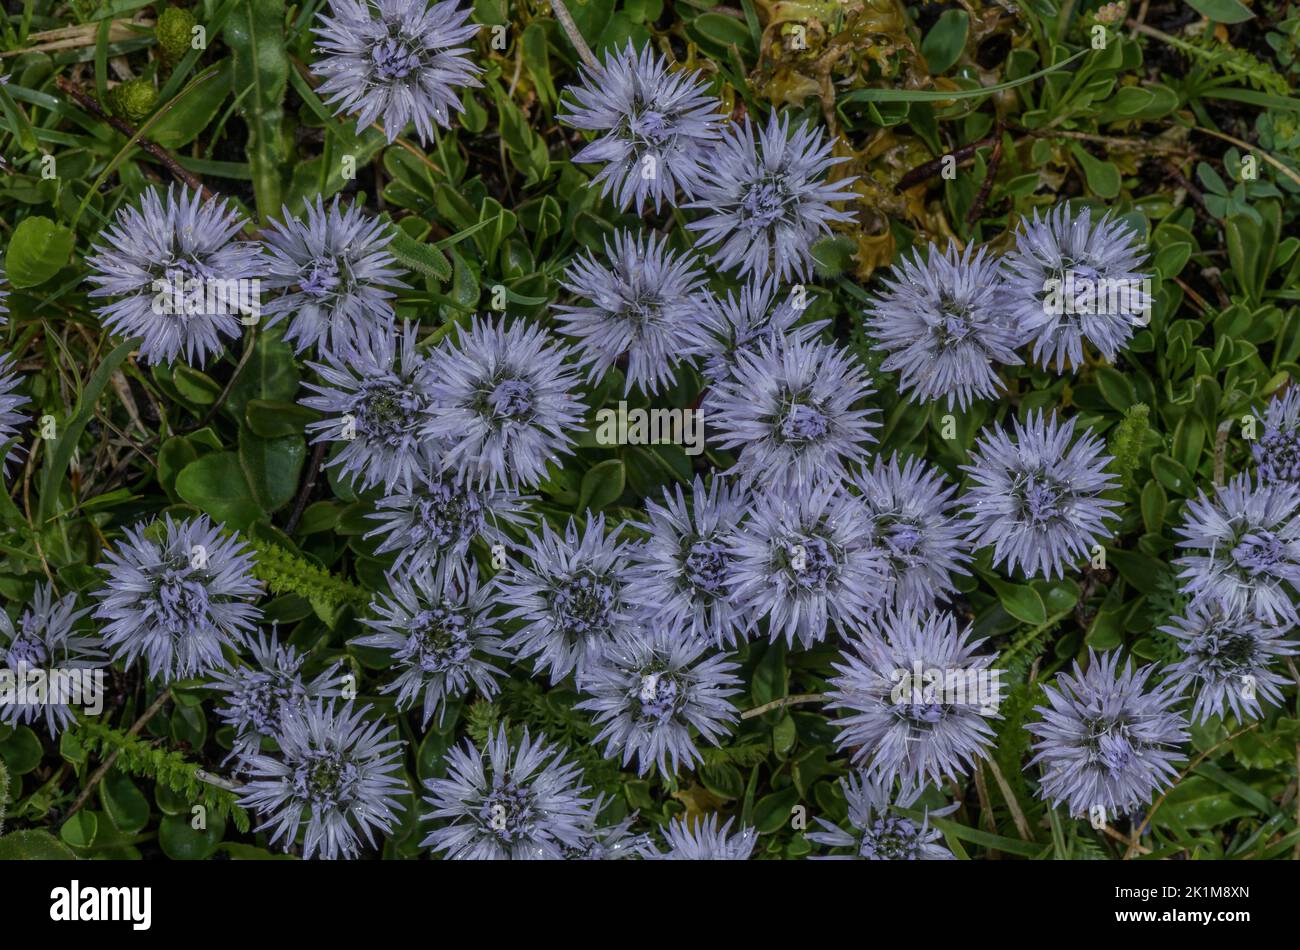 Matted Globularia, Globularia cordifolia, in flower in alpine grassland, Swiss Alps. Stock Photo